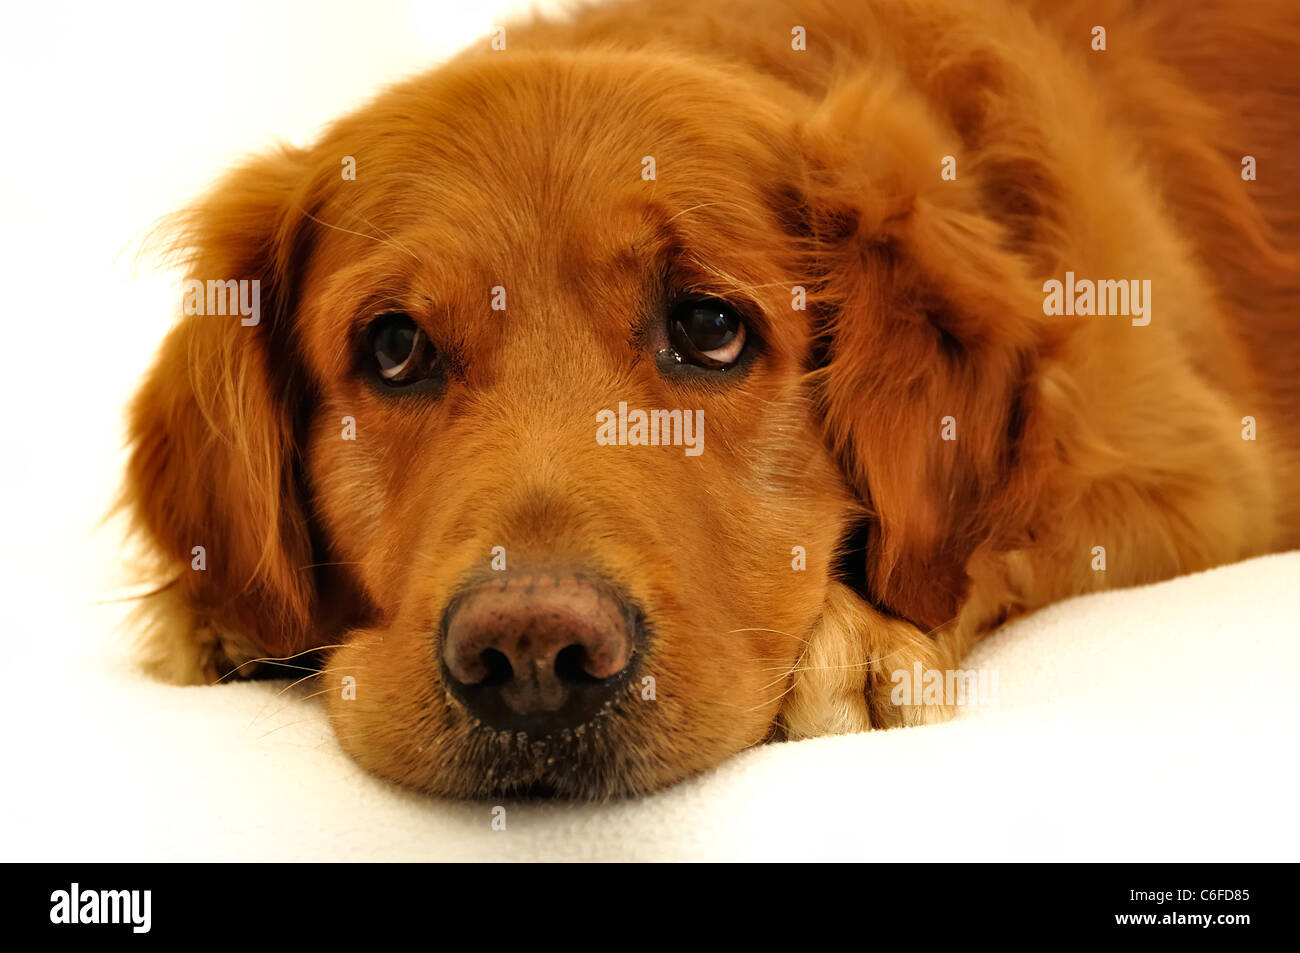 Golden retriever dog très expressif face close up. Banque D'Images